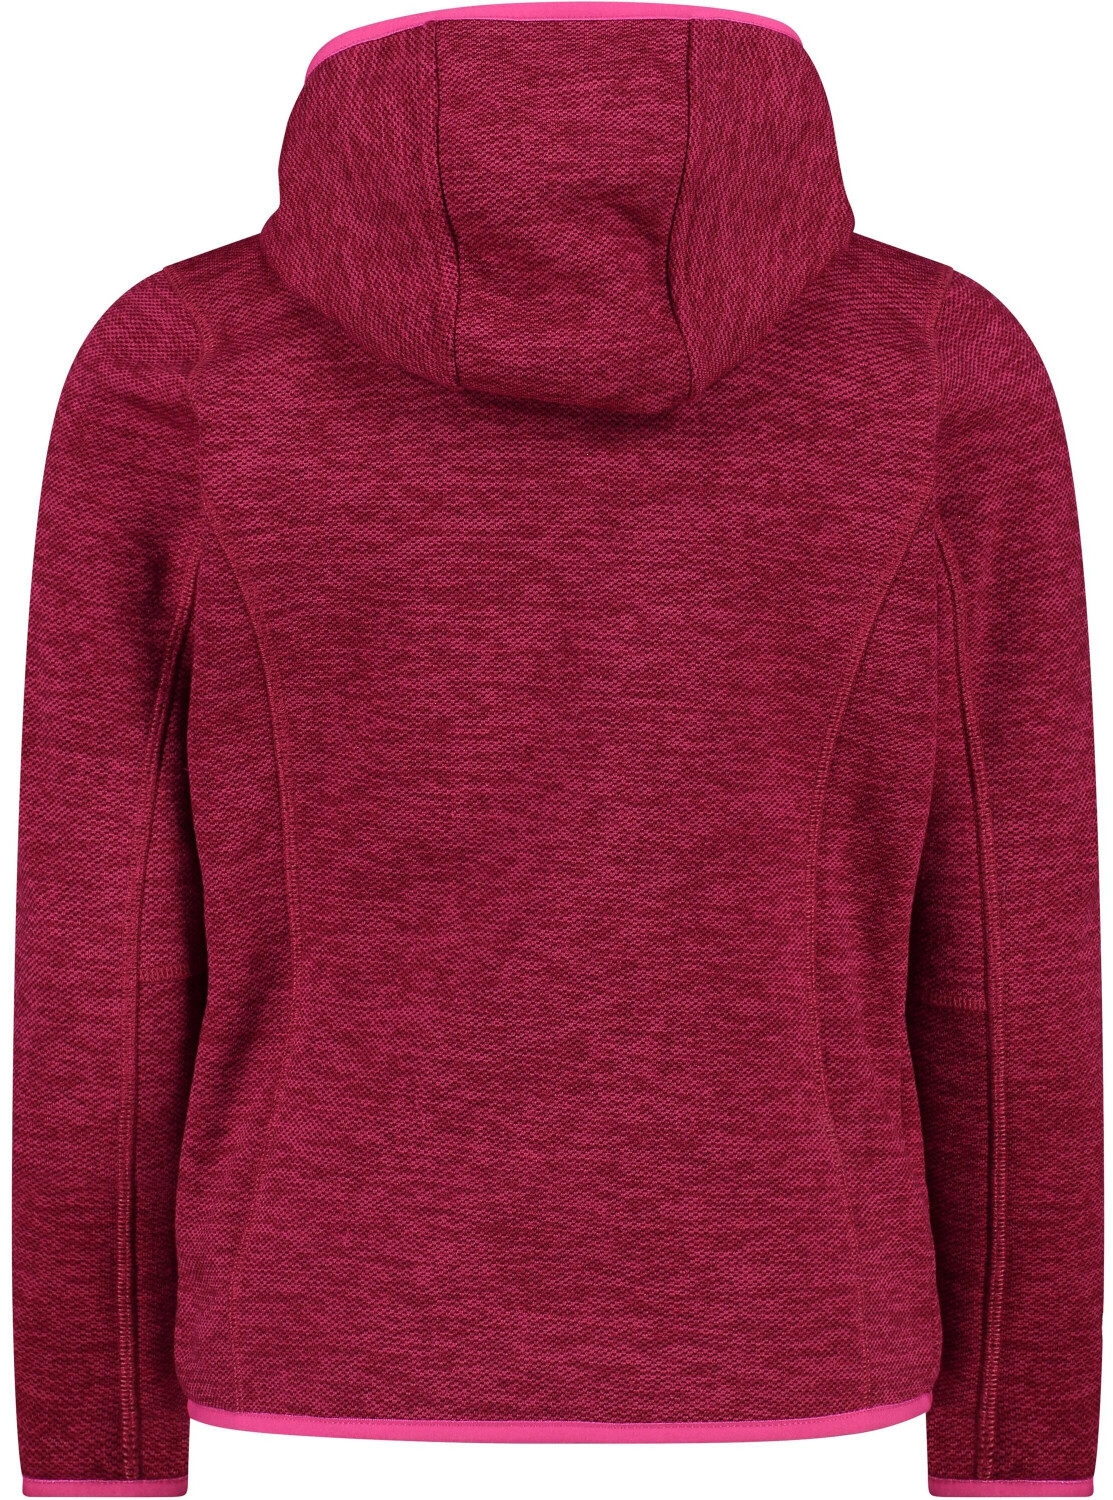 CMP Girl Fleece-Jacket Knit-Tech (3H19825) fuxia/anemone ab 29,87 € |  Preisvergleich bei